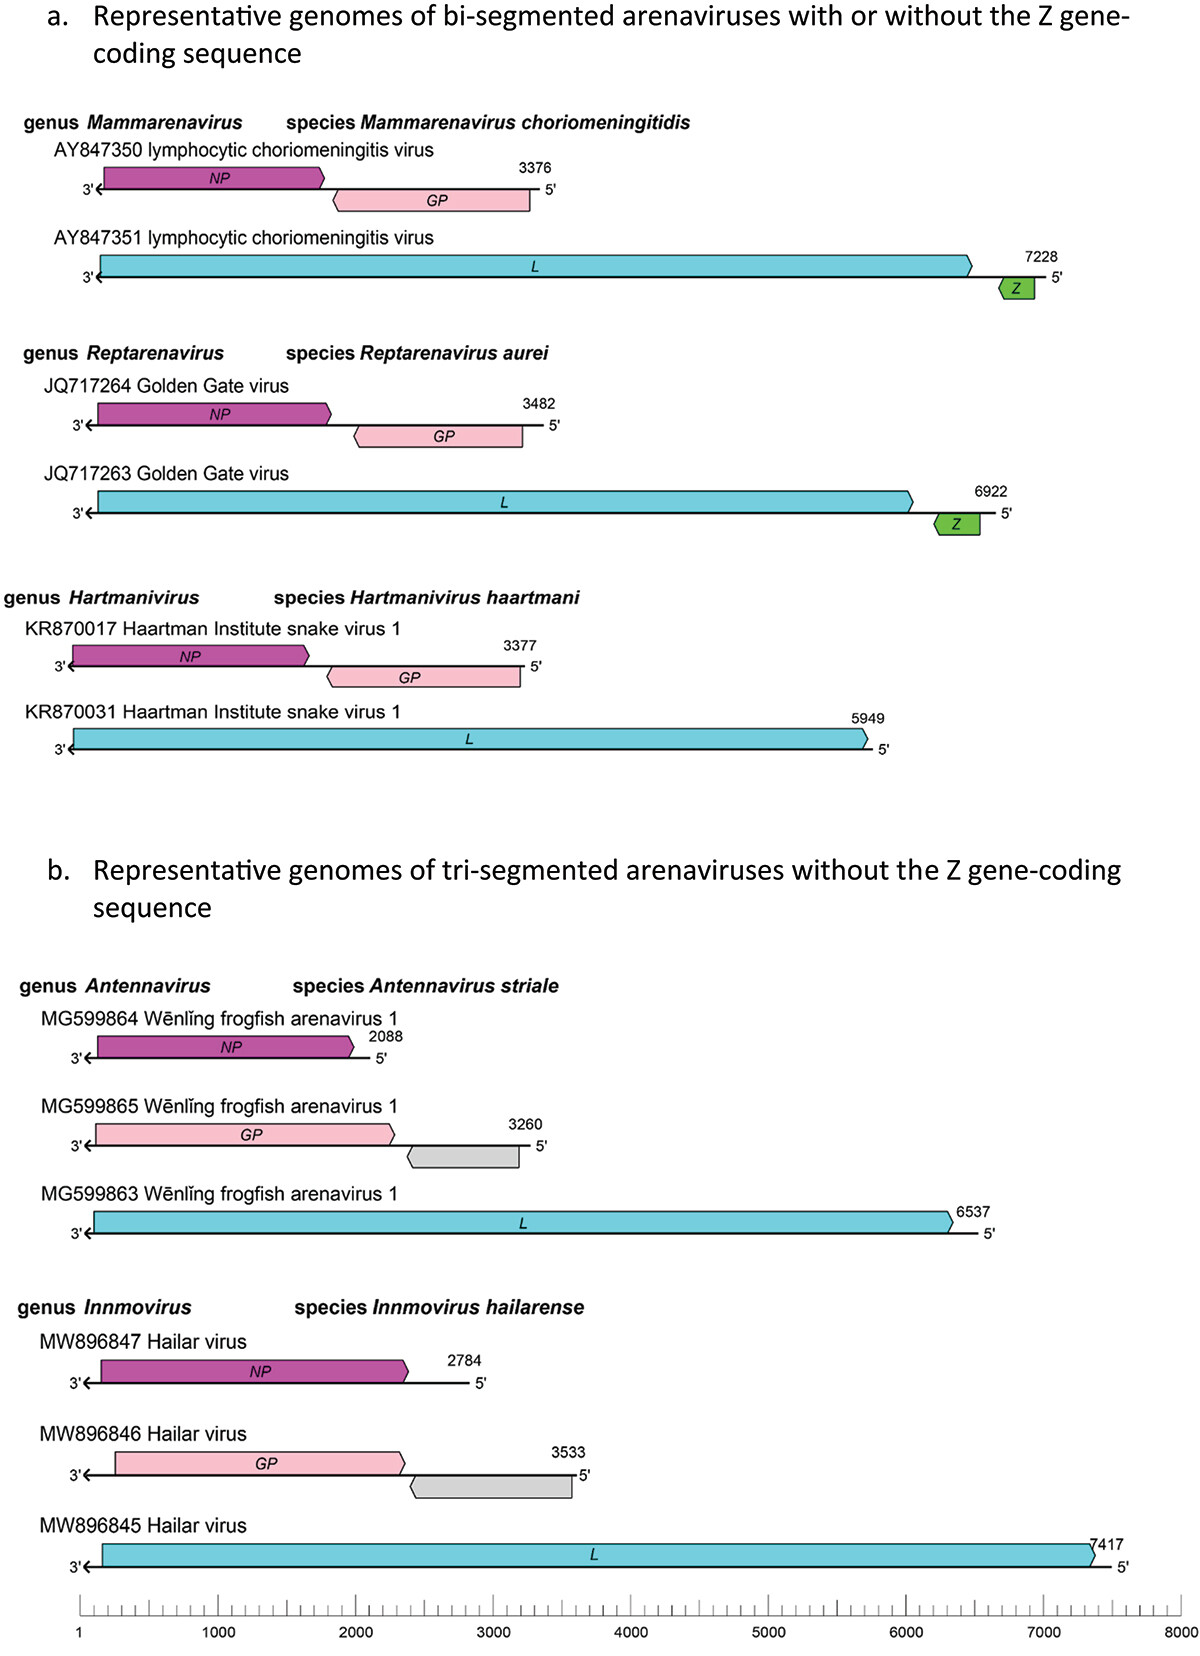 Figure 1. Schematic representations of bi-segmented (a) and tri-segmented (b) arenaviral genomes of the genus mammarenavirus (representative lymphocytic choriomeningitis virus with its genomic sequence designations AY847350 and AY847351 available in GenBank), genus reptarenavirus (representative Golden Gate virus with its genomic sequences JQ717264 and 717,263), genus hartmanivirus (representative Haartman institute snake virus 1 with its genomic sequences KR870017 and KR870031), genus antennavirus (represe